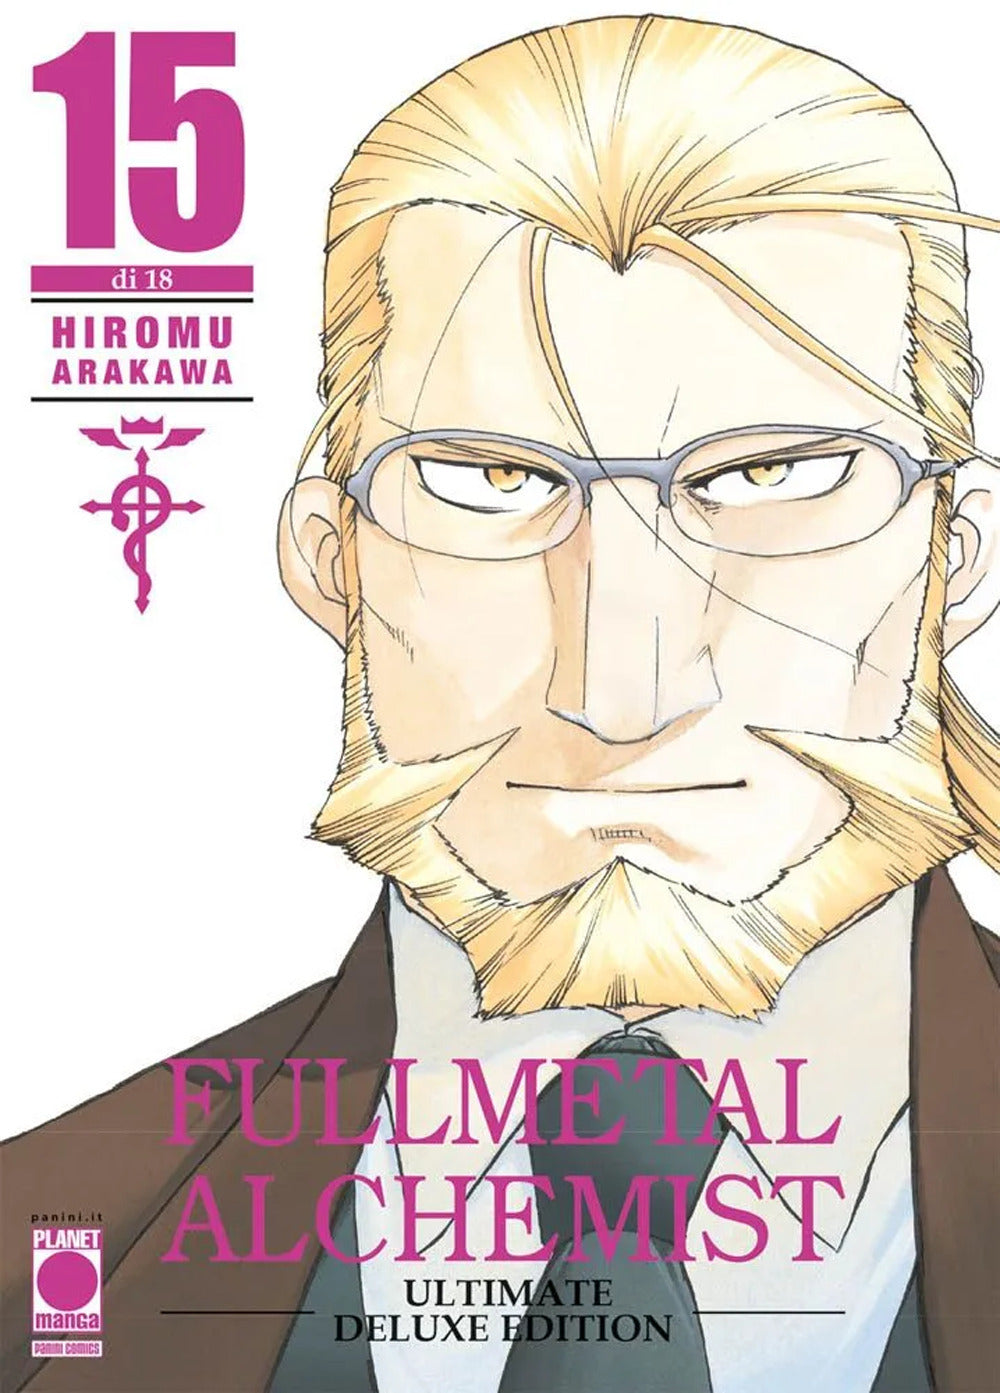 Fullmetal alchemist. Ultimate deluxe edition. Vol. 15.